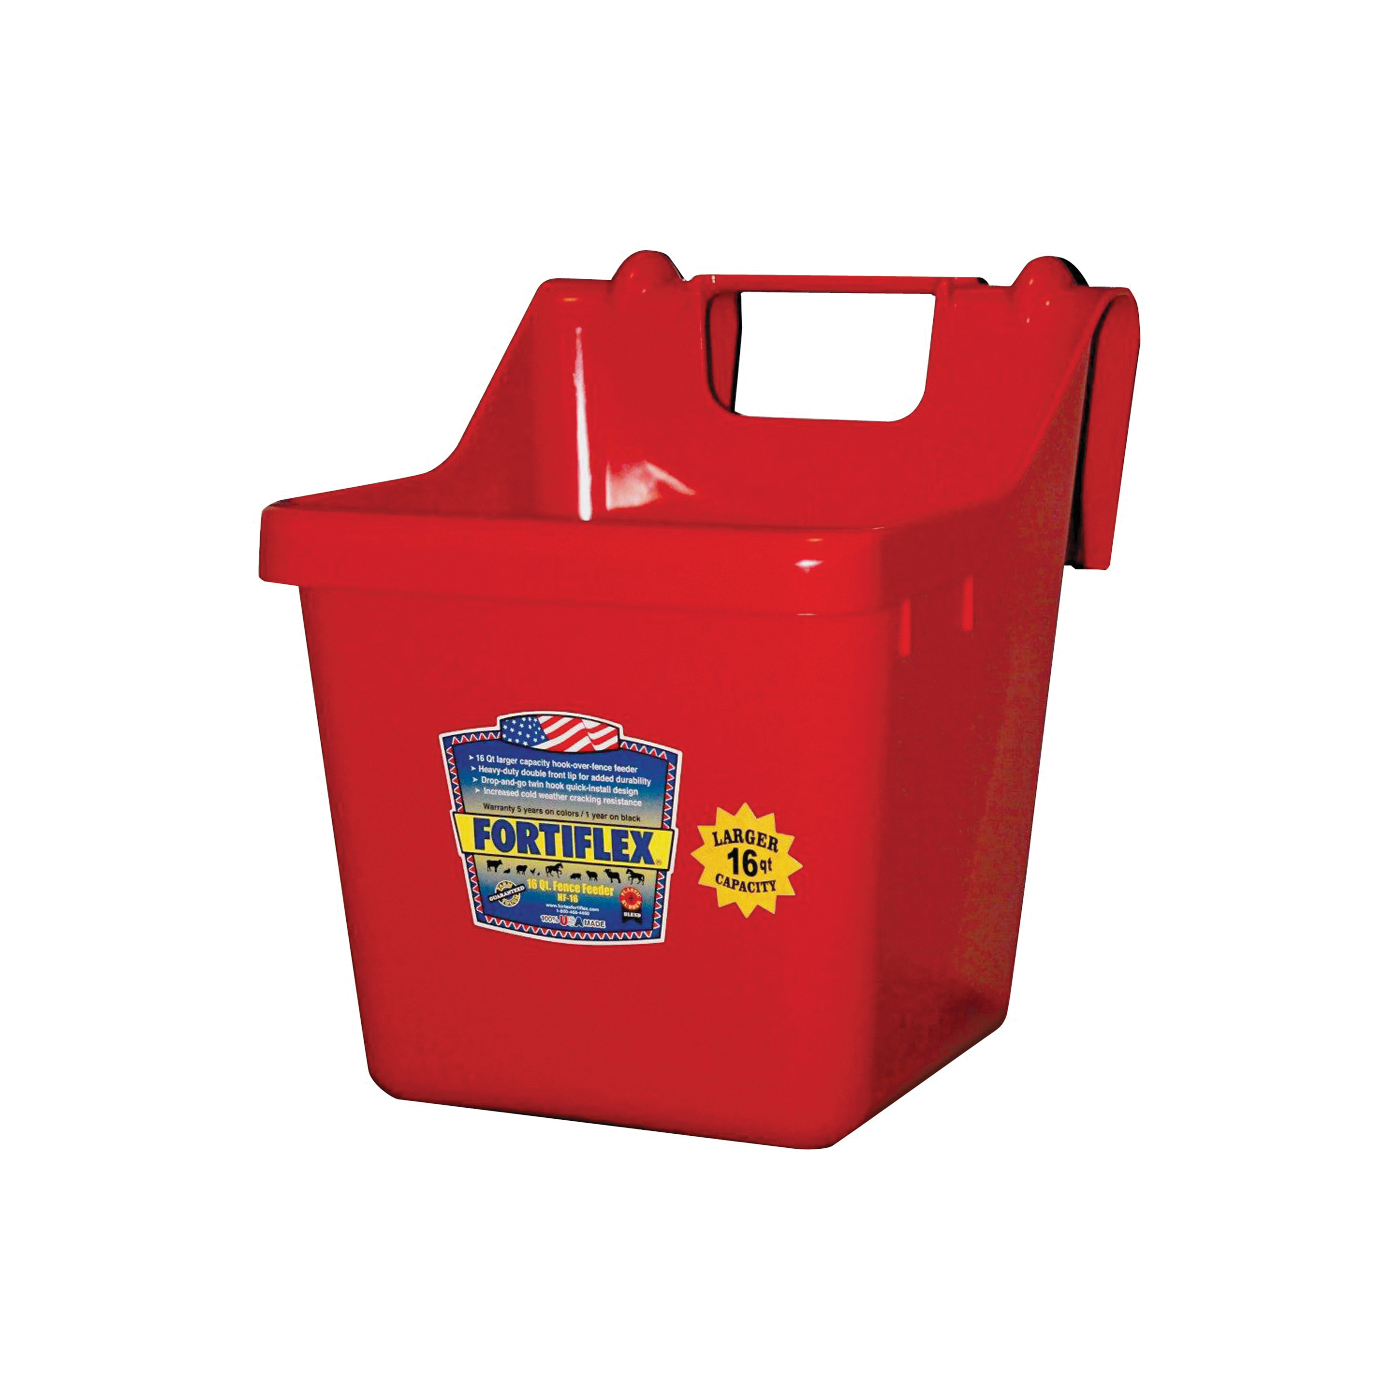 Fortex-Fortiflex 1301602 Bucket Feeder, 16 qt Volume, Fortalloy Rubber Polymer, Red